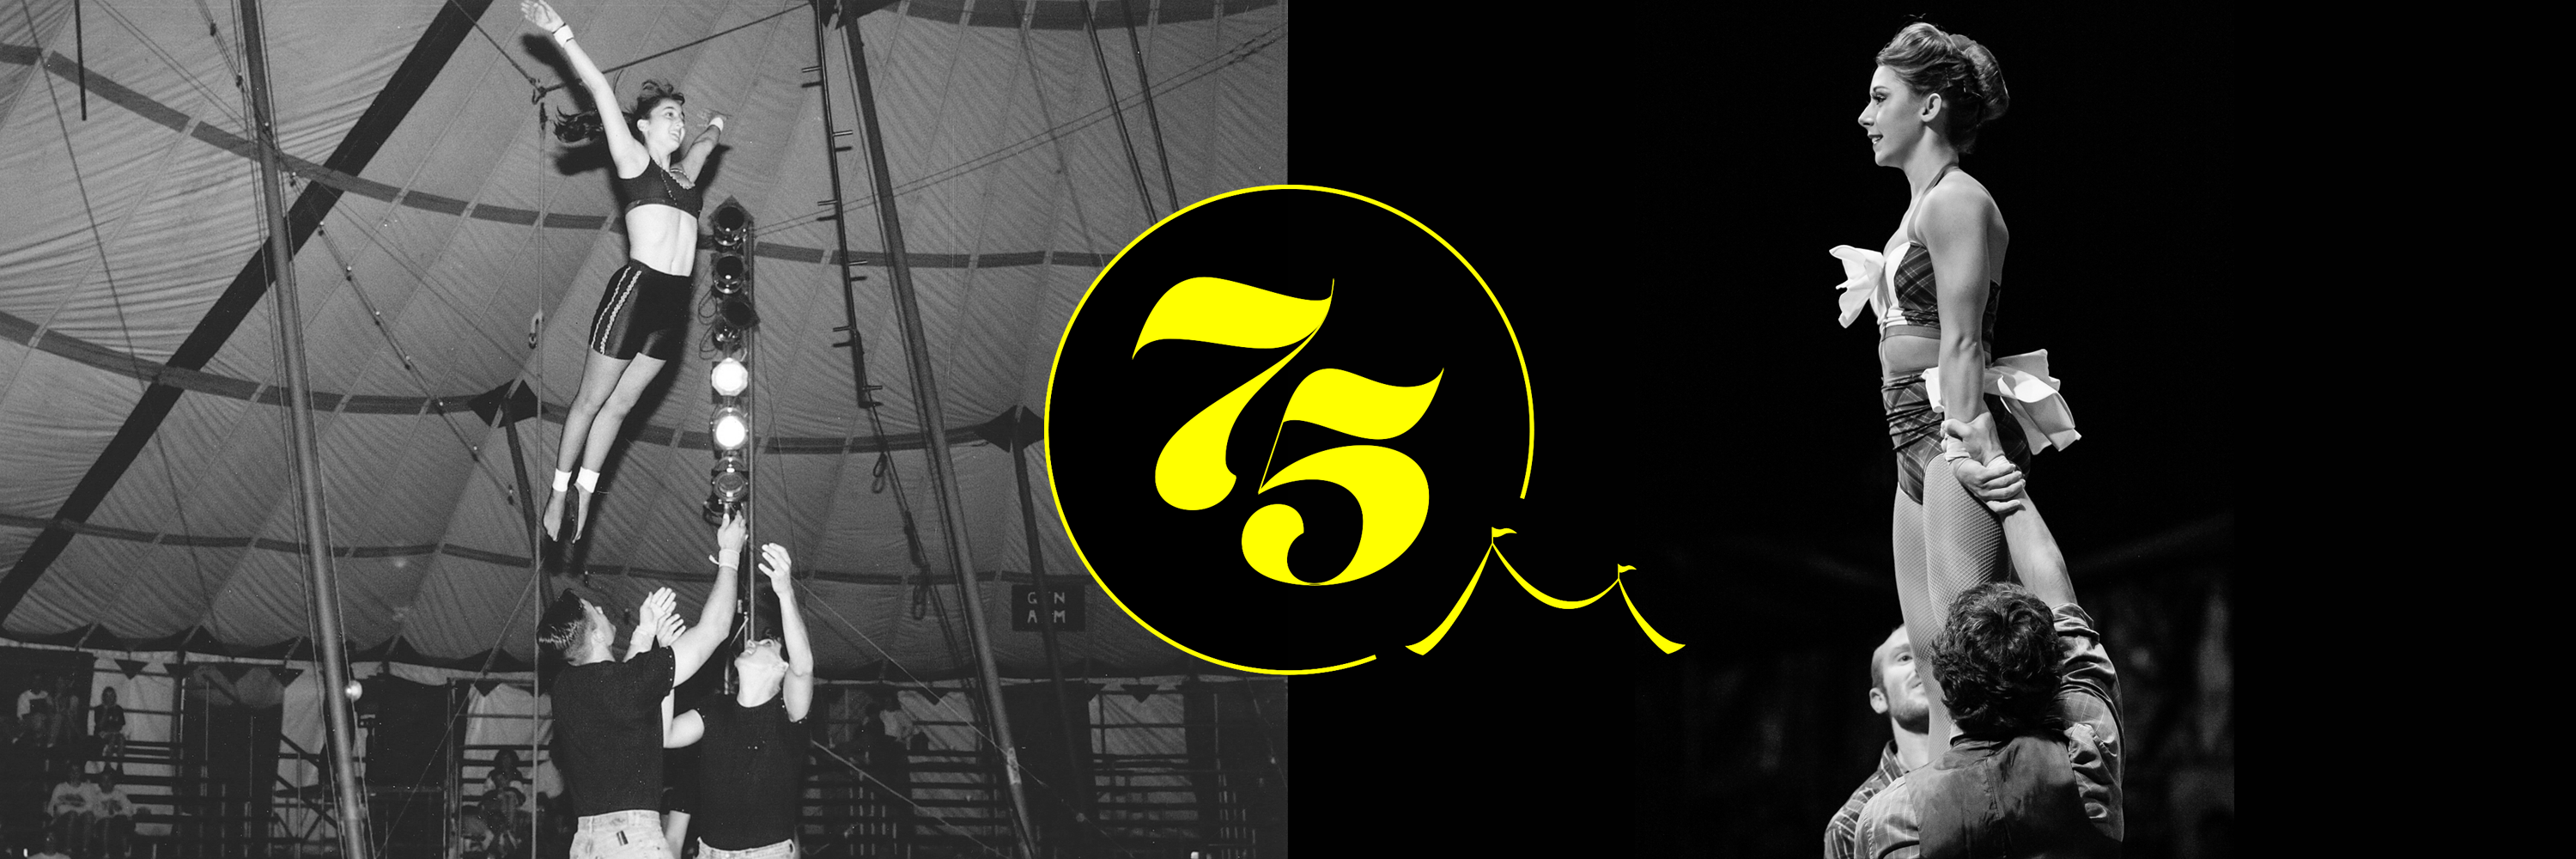 75th anniversary-Quartet